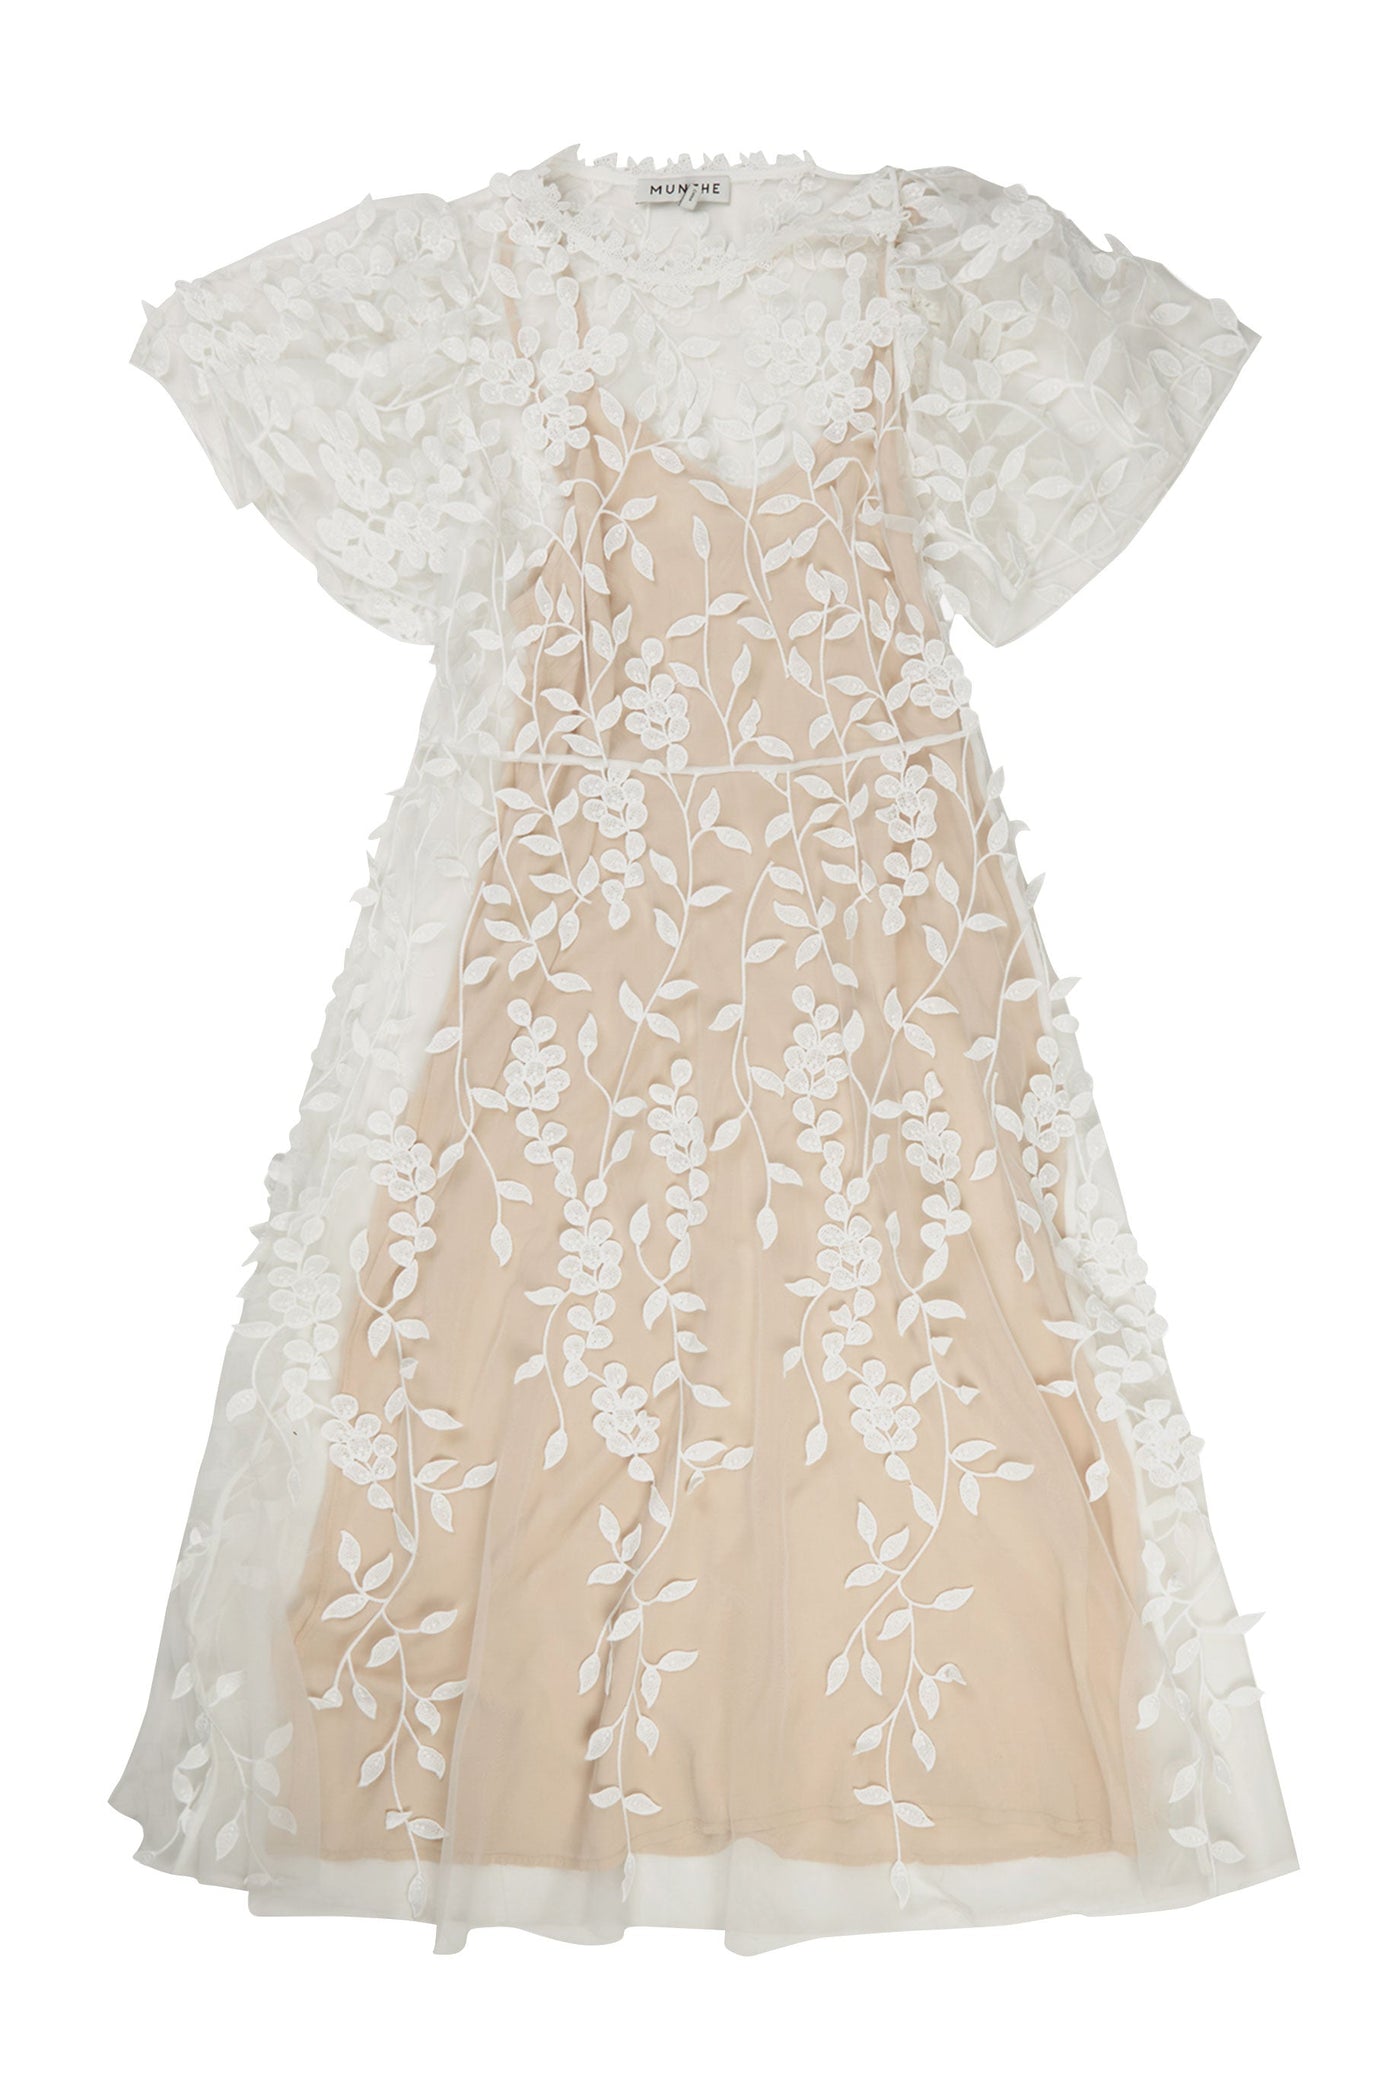 Munthe Urilanca Dress - White